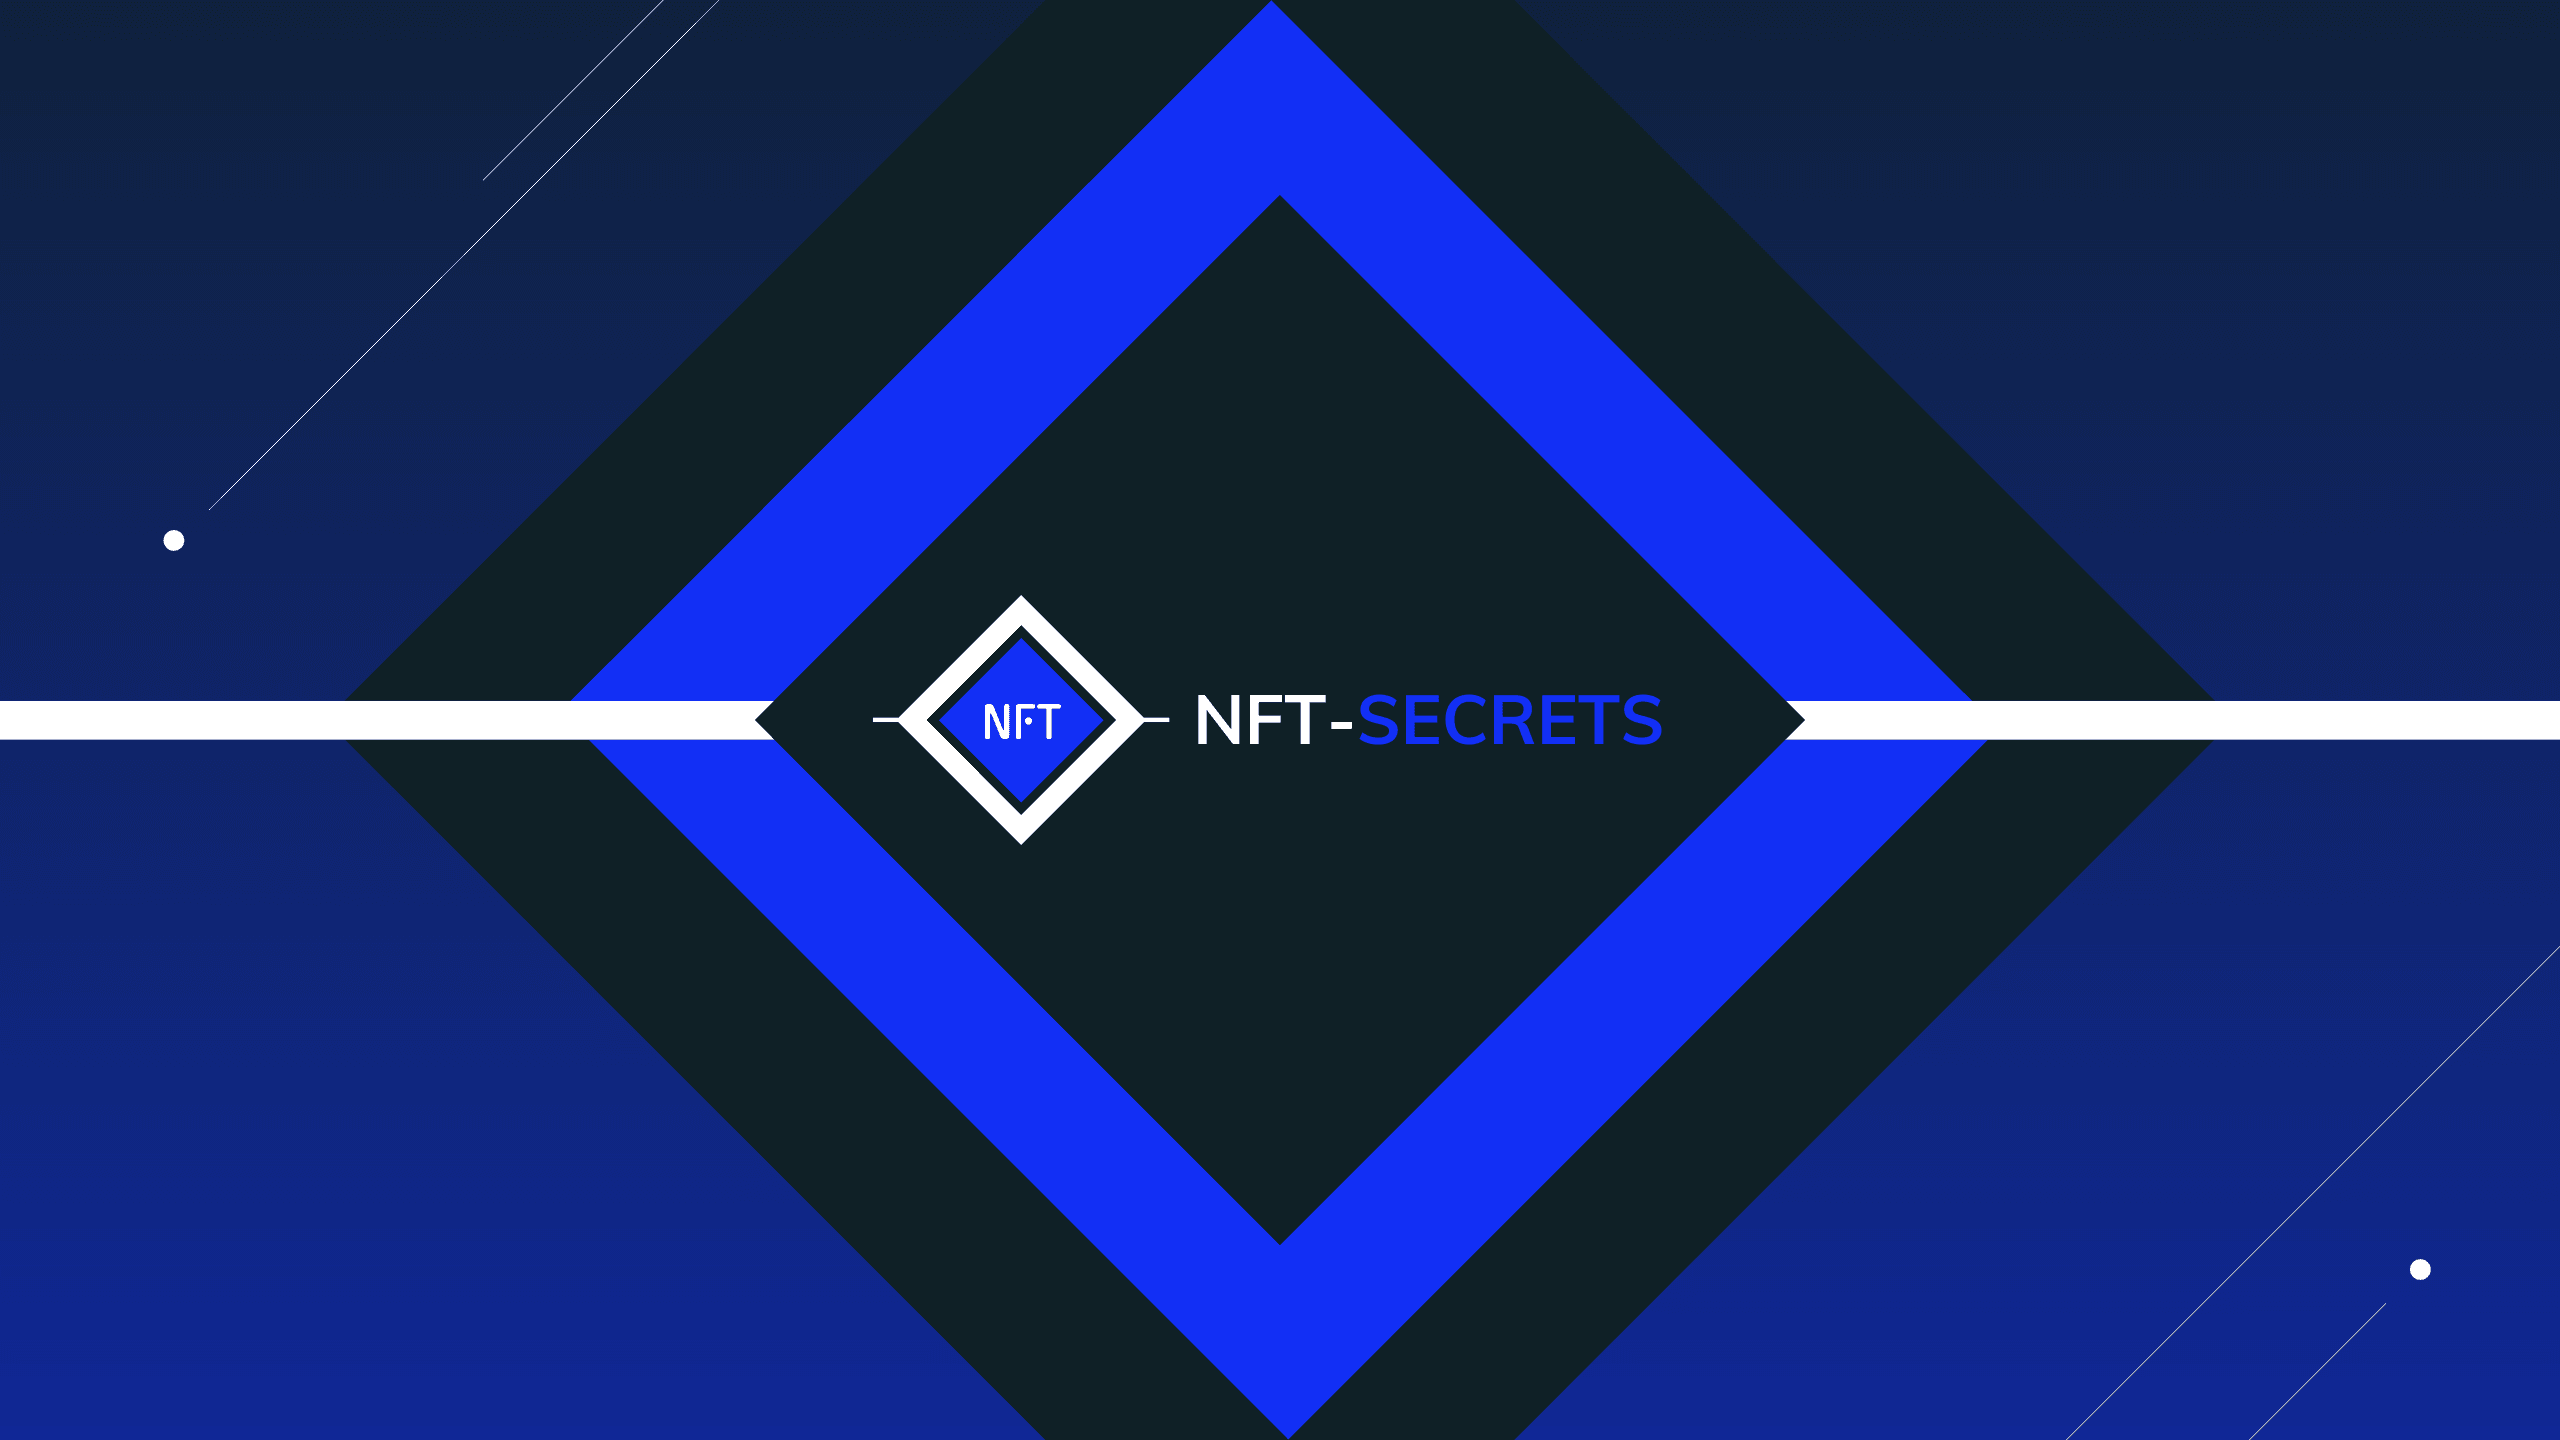 NFT-secrets banner